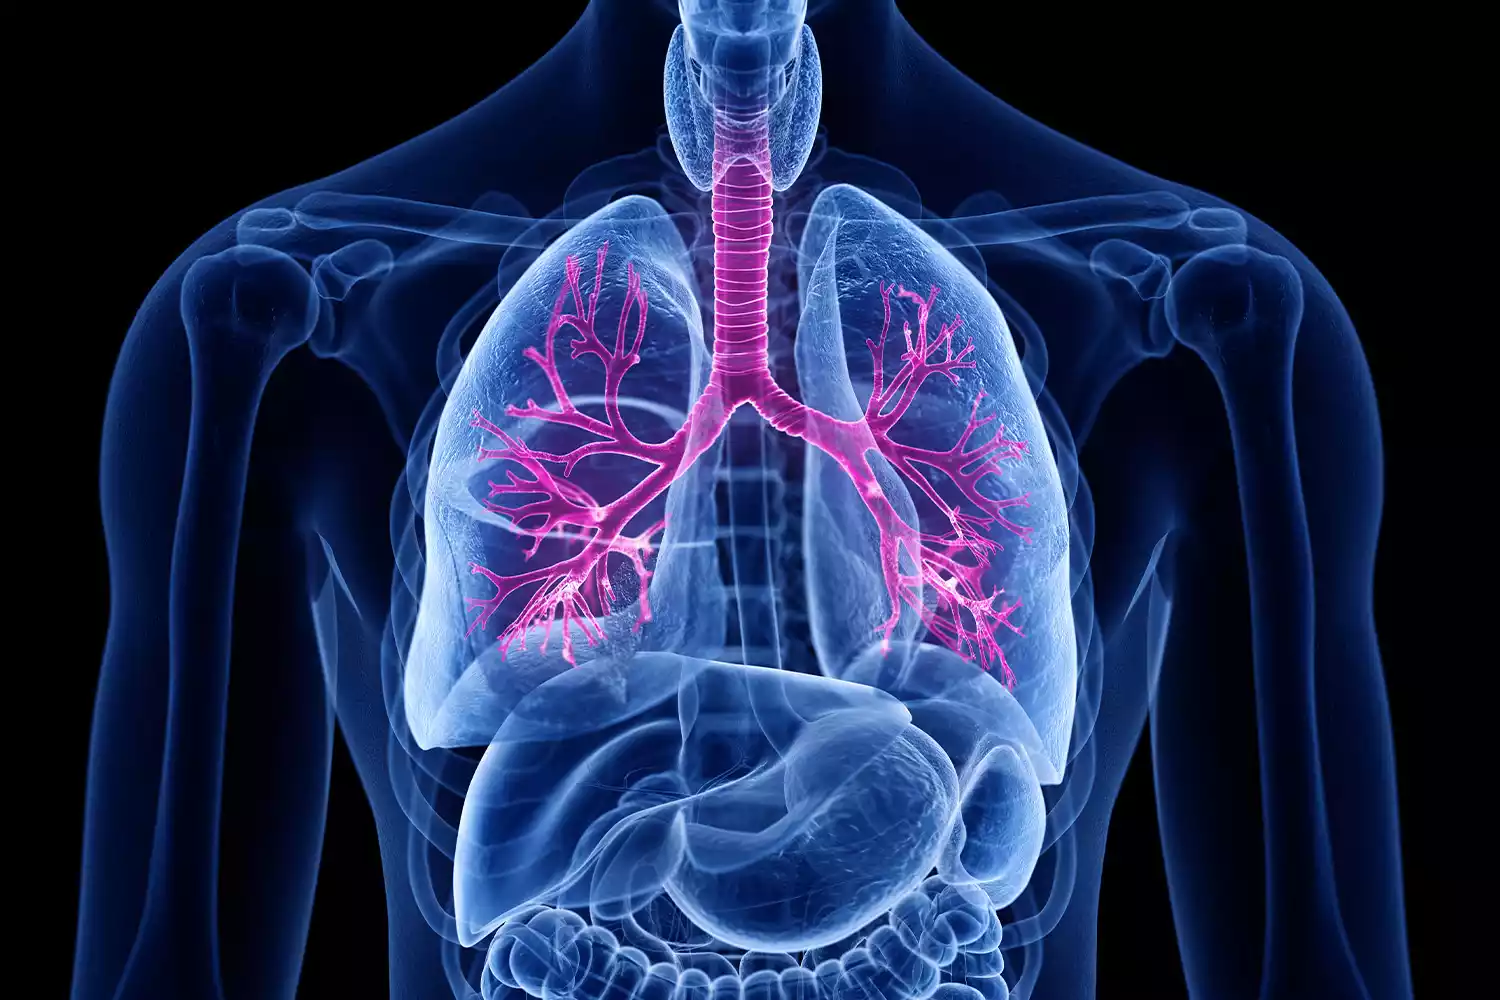 Obstructive Pulmonary Disease